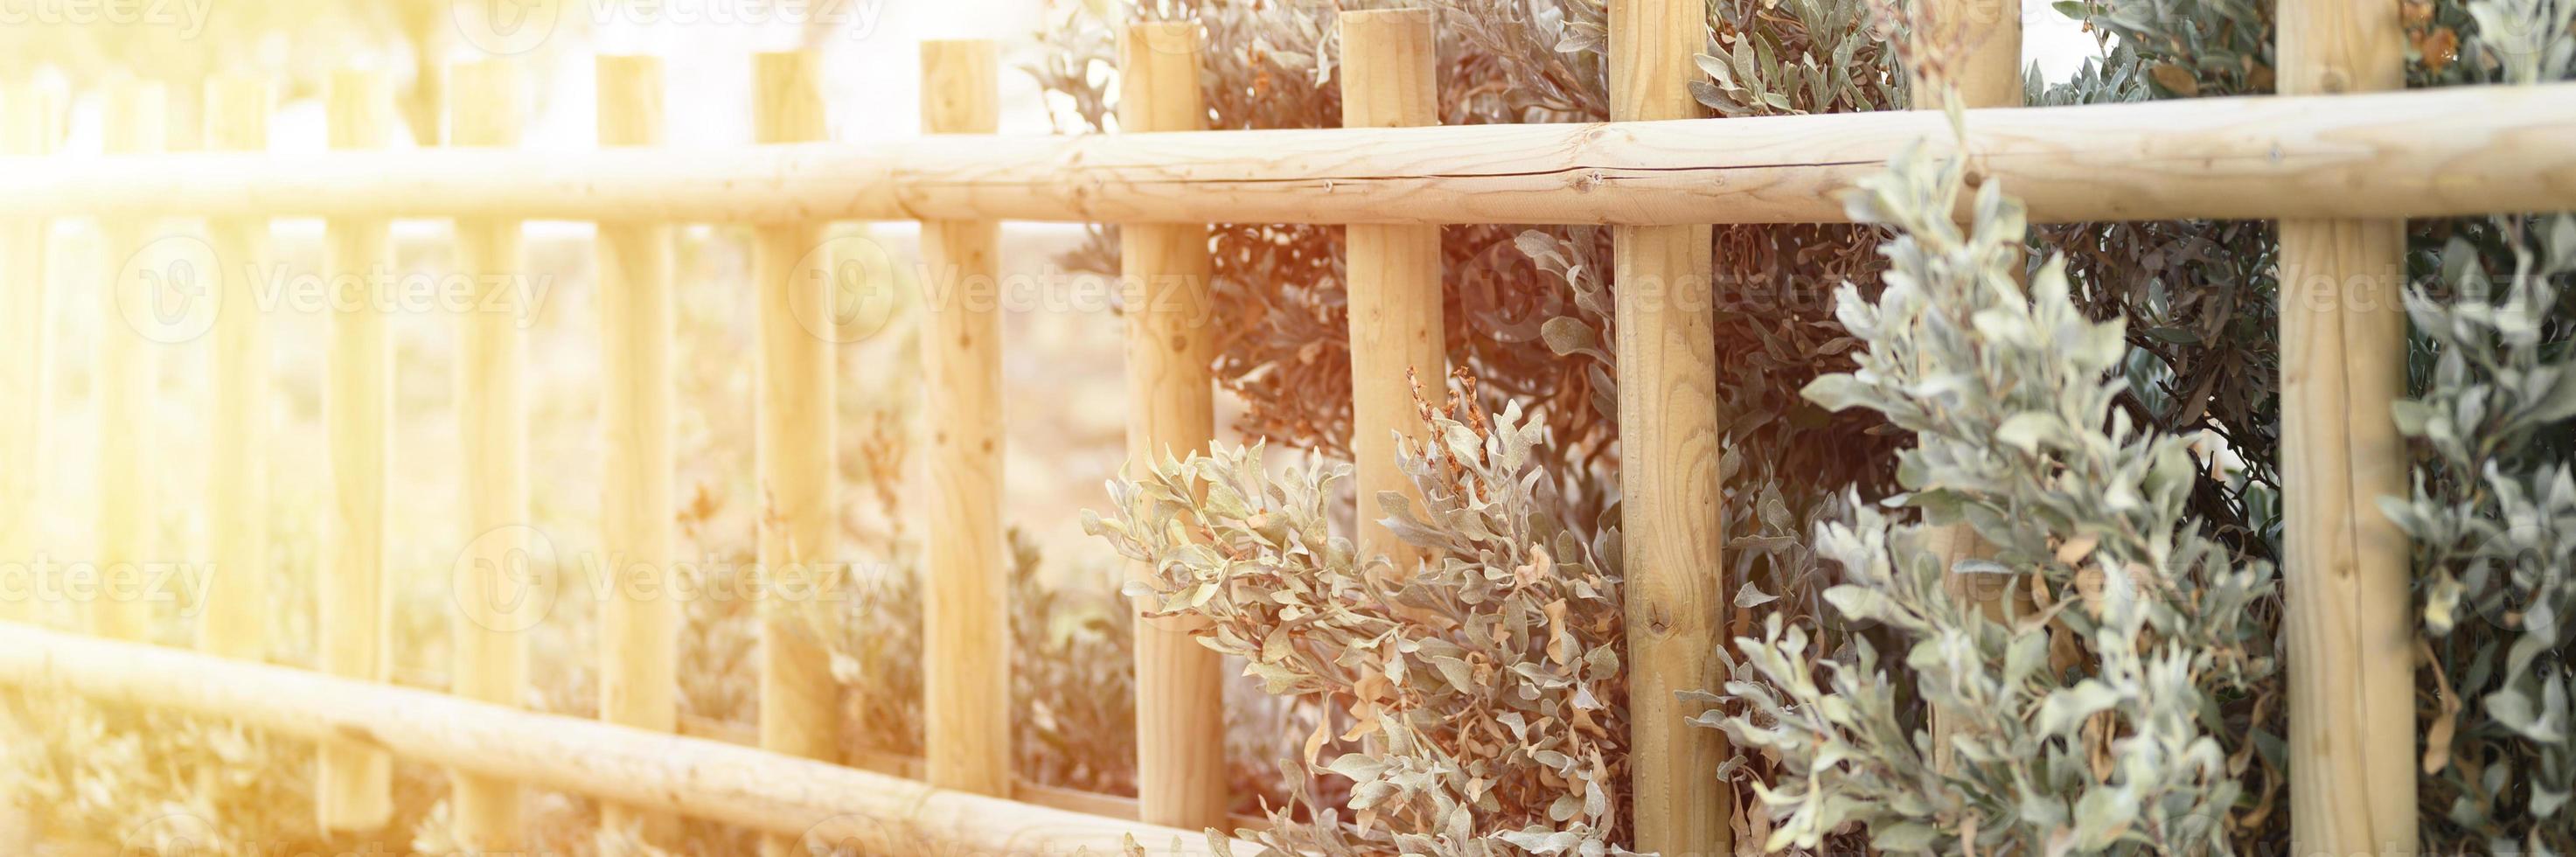 decoratief houten hek en witgroene struikenplanten foto